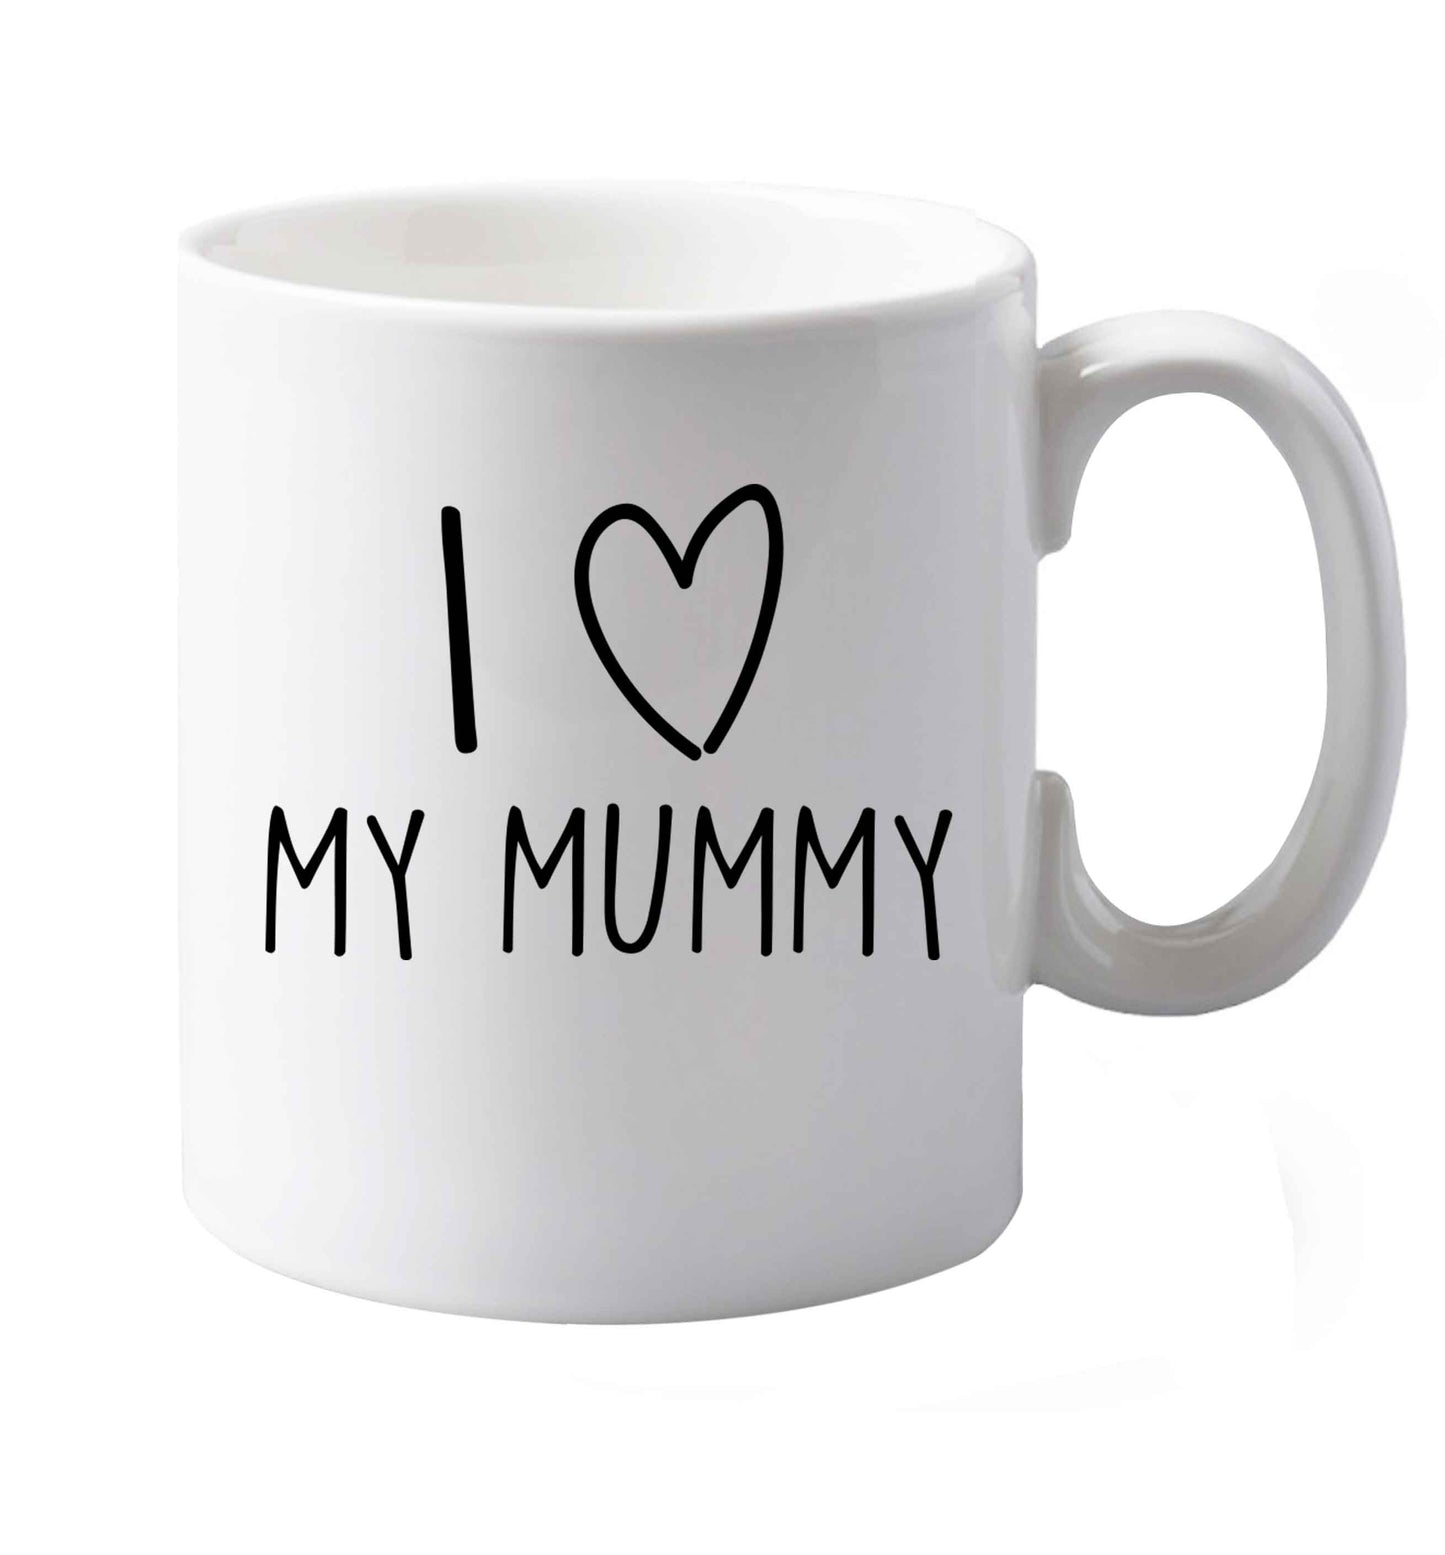 10 oz I love my mummy ceramic mug both sides